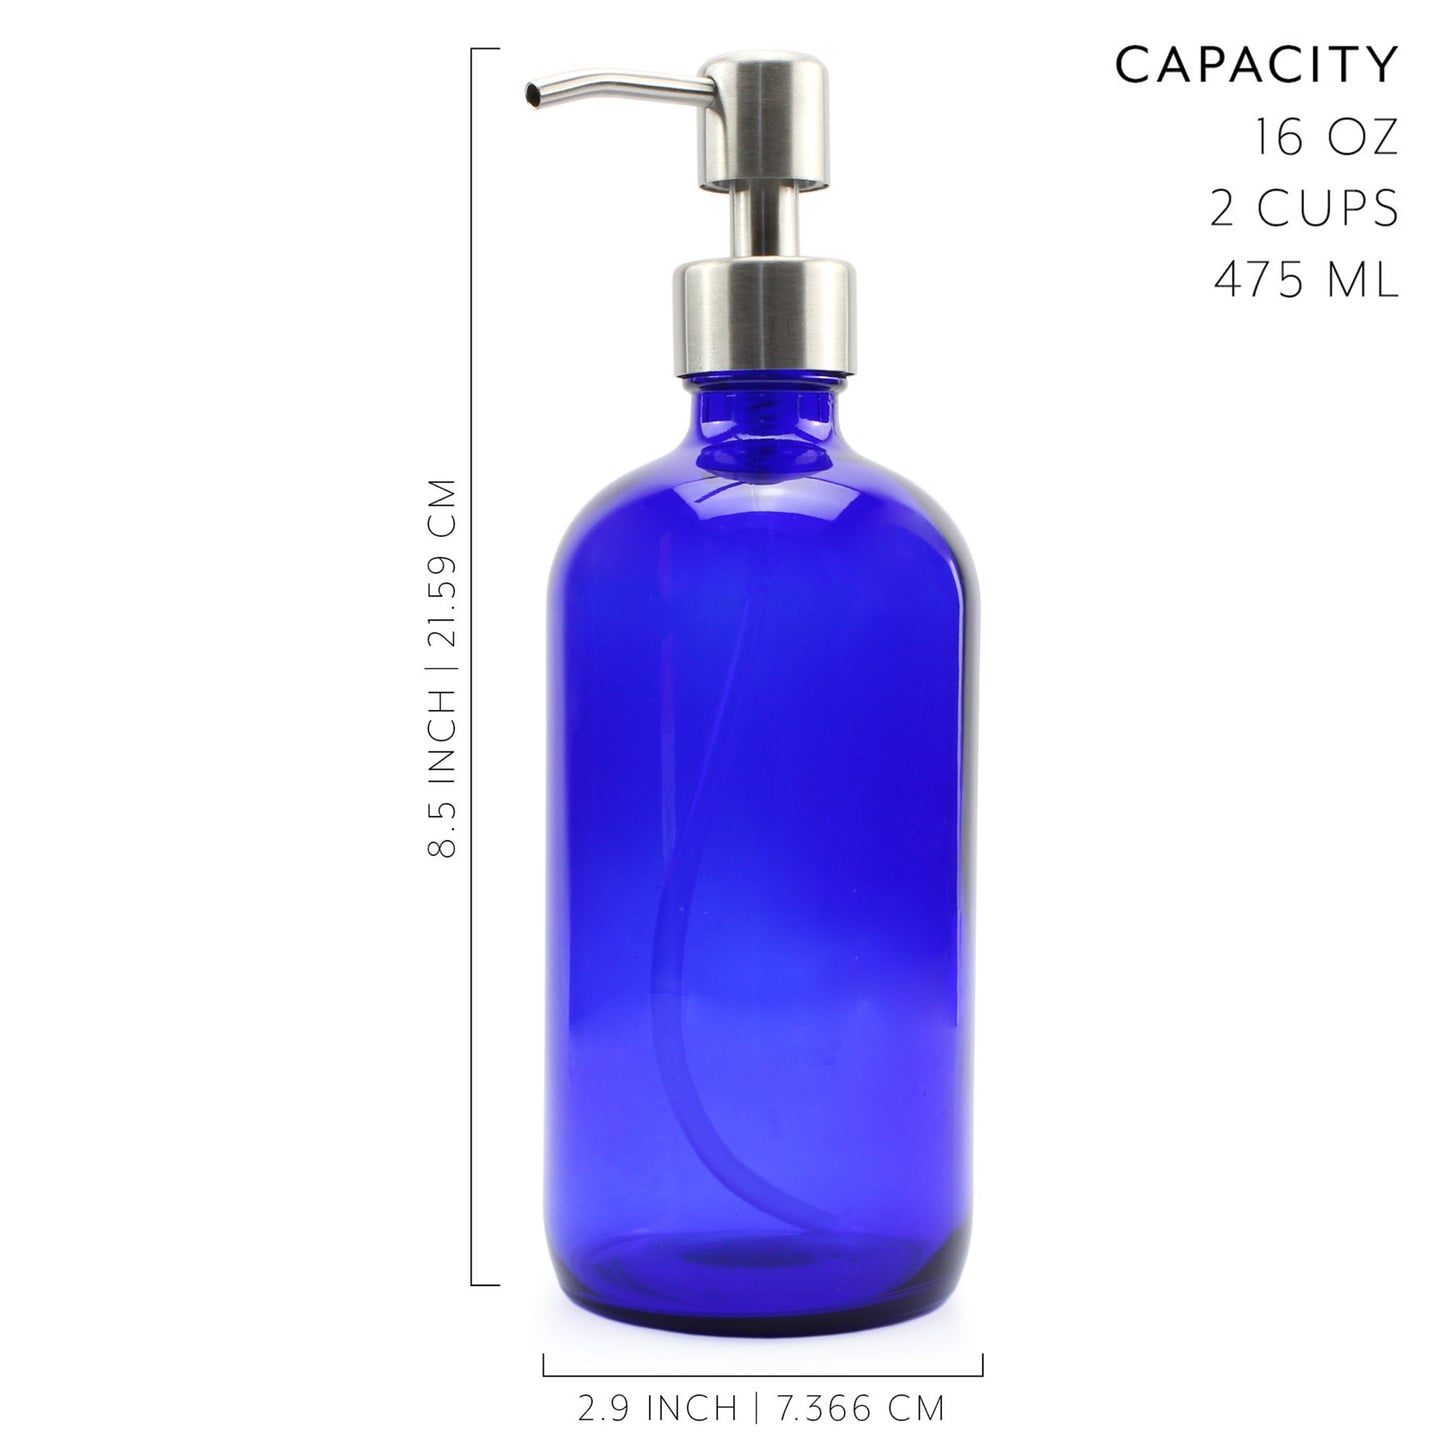 16oz Cobalt Blue Glass Bottles w/Stainless Steel Pumps (2-Pack) - sh865cb0aep